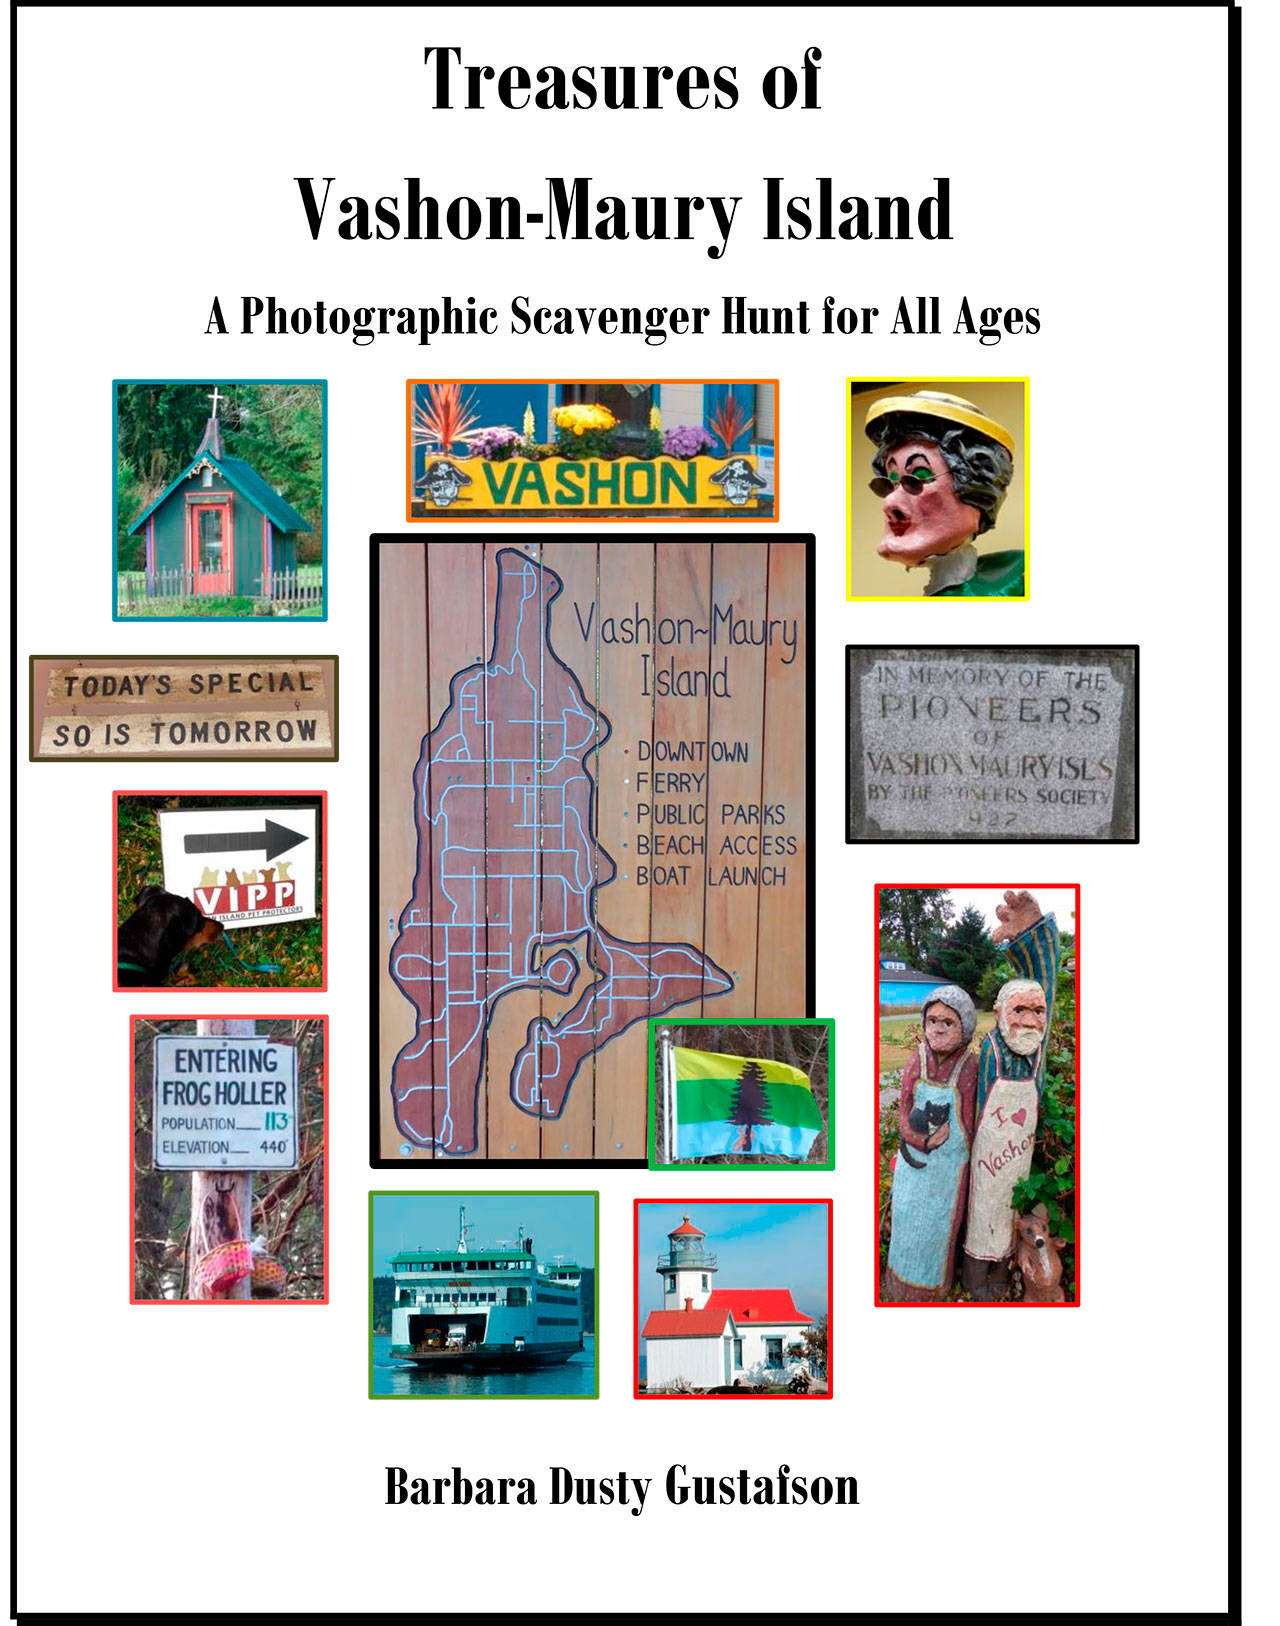 Courtesy Photo                                The cover of Barbara Gustafson’s new book, “Treasures of Vashon-Maury Island”